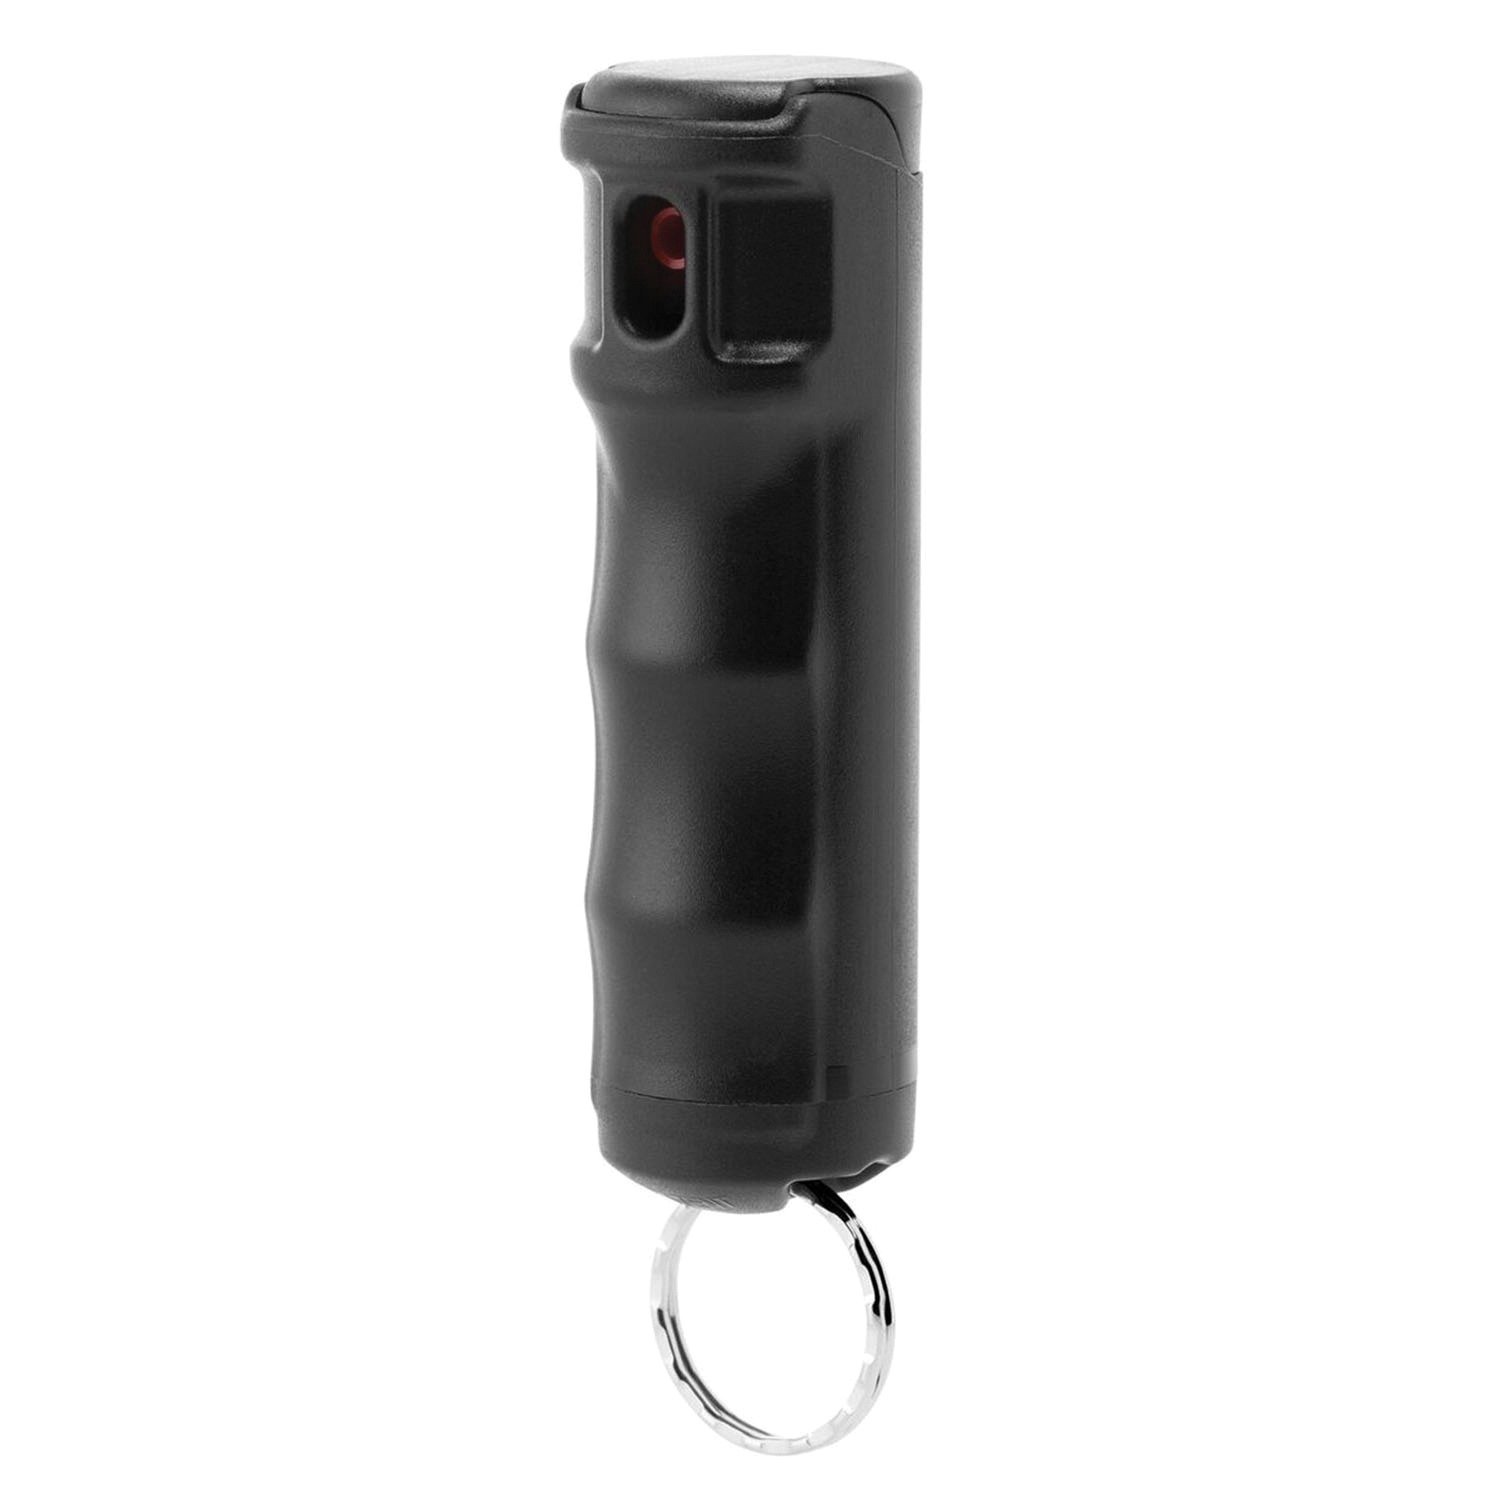 MACE 80785 Compact Model Pepper Spray (Black)